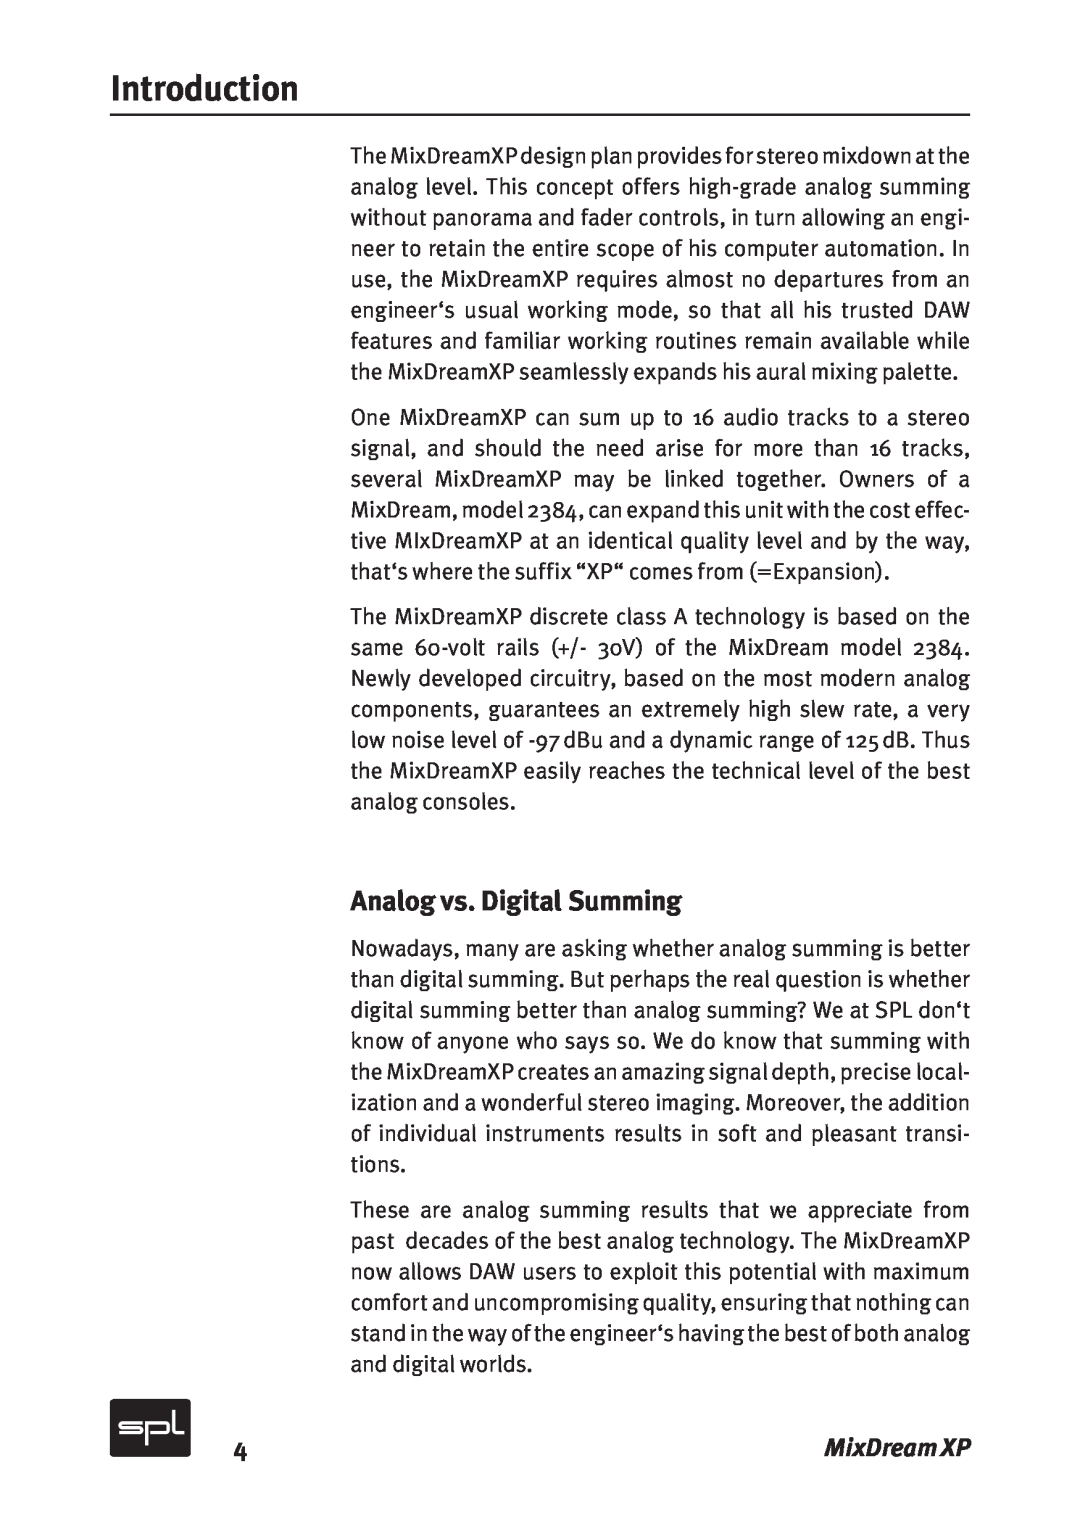 Sound Performance Lab Model 2591 manual Introduction, Analog vs. Digital Summing 